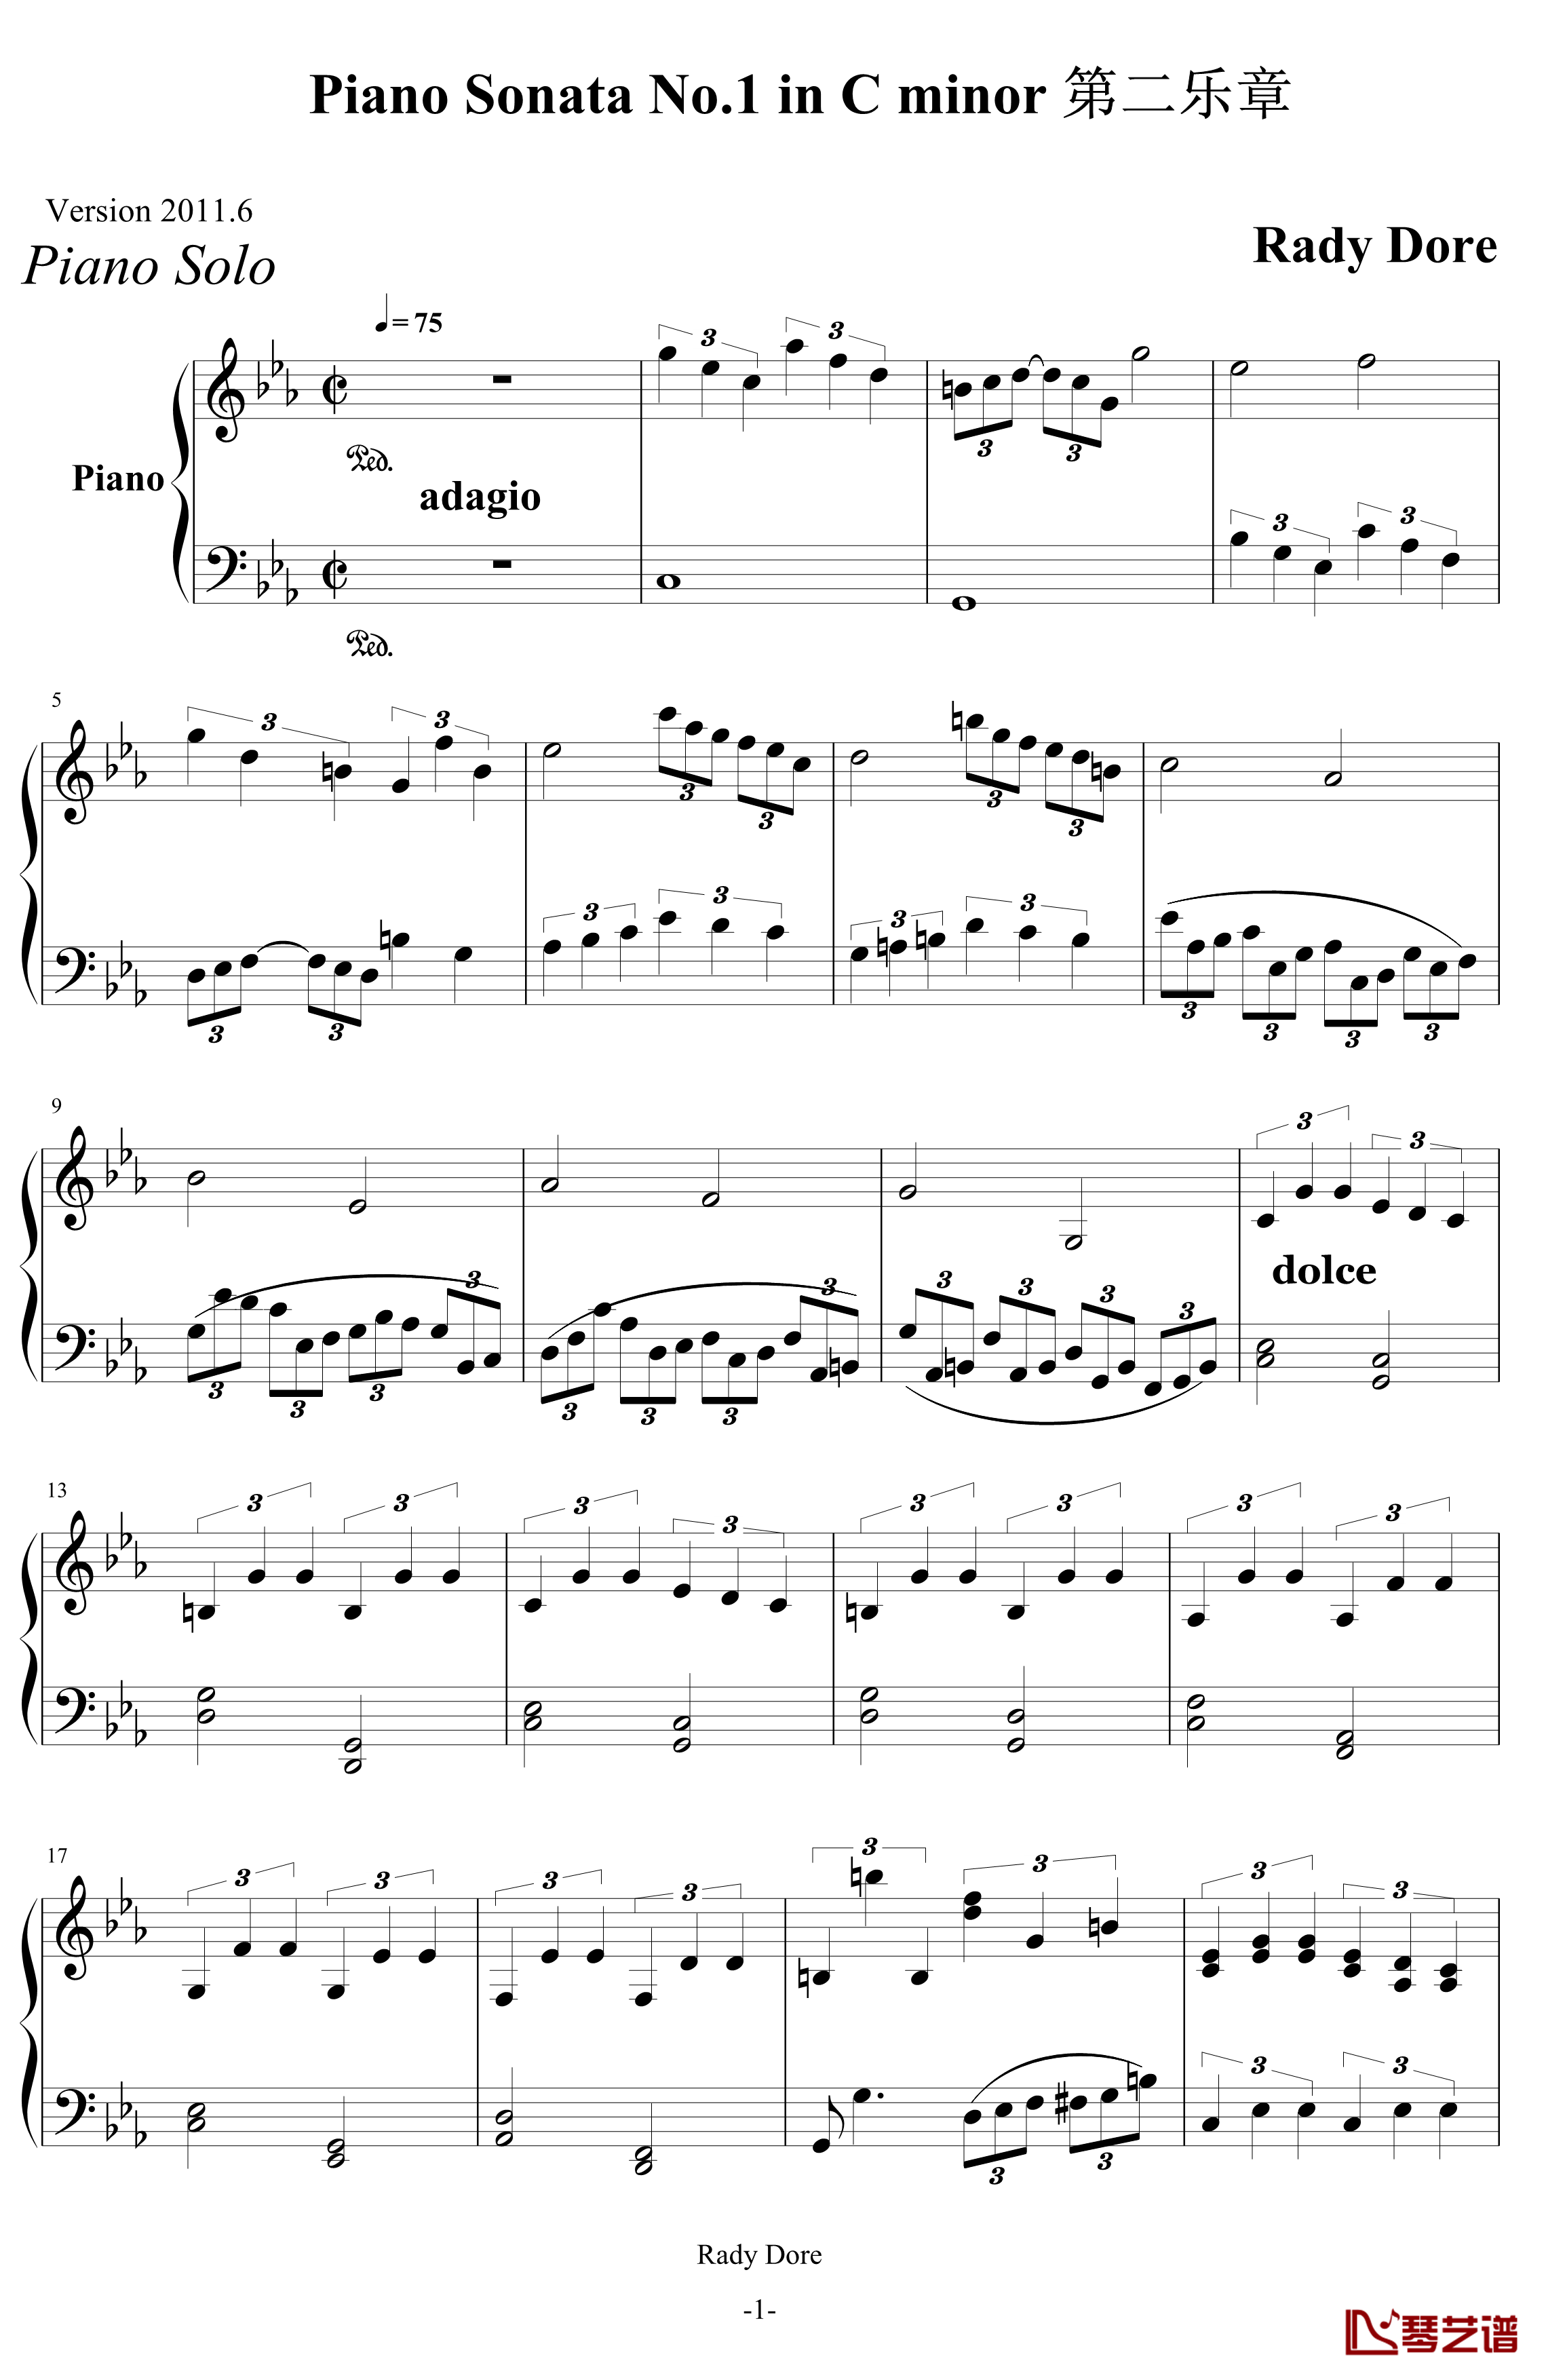 C小调第一钢琴奏鸣曲第二乐章钢琴谱-Ver 2011.6-舍勒七世1